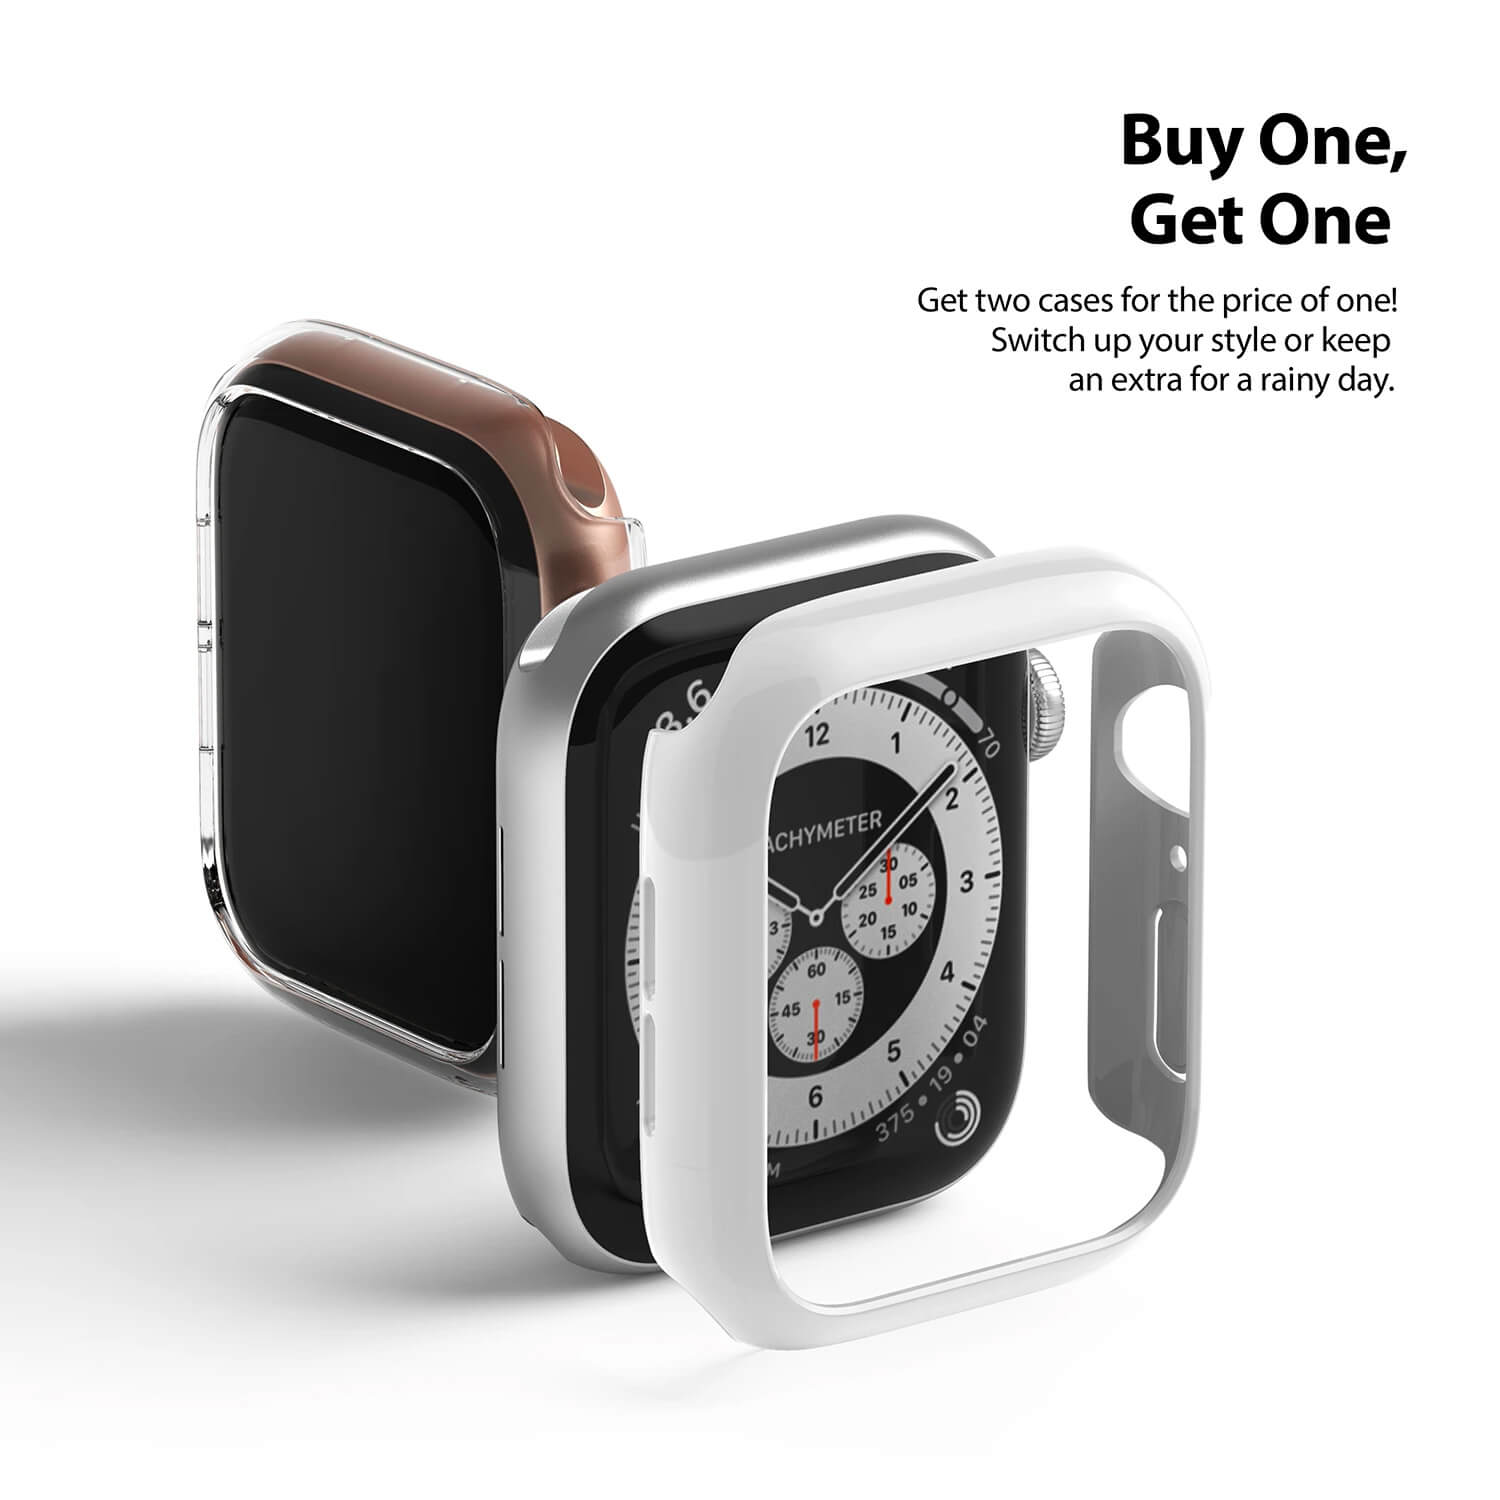 Ringke Apple Watch Series 6 / SE / 5 / 4 44mm Case Slim Clear & Dark Grey